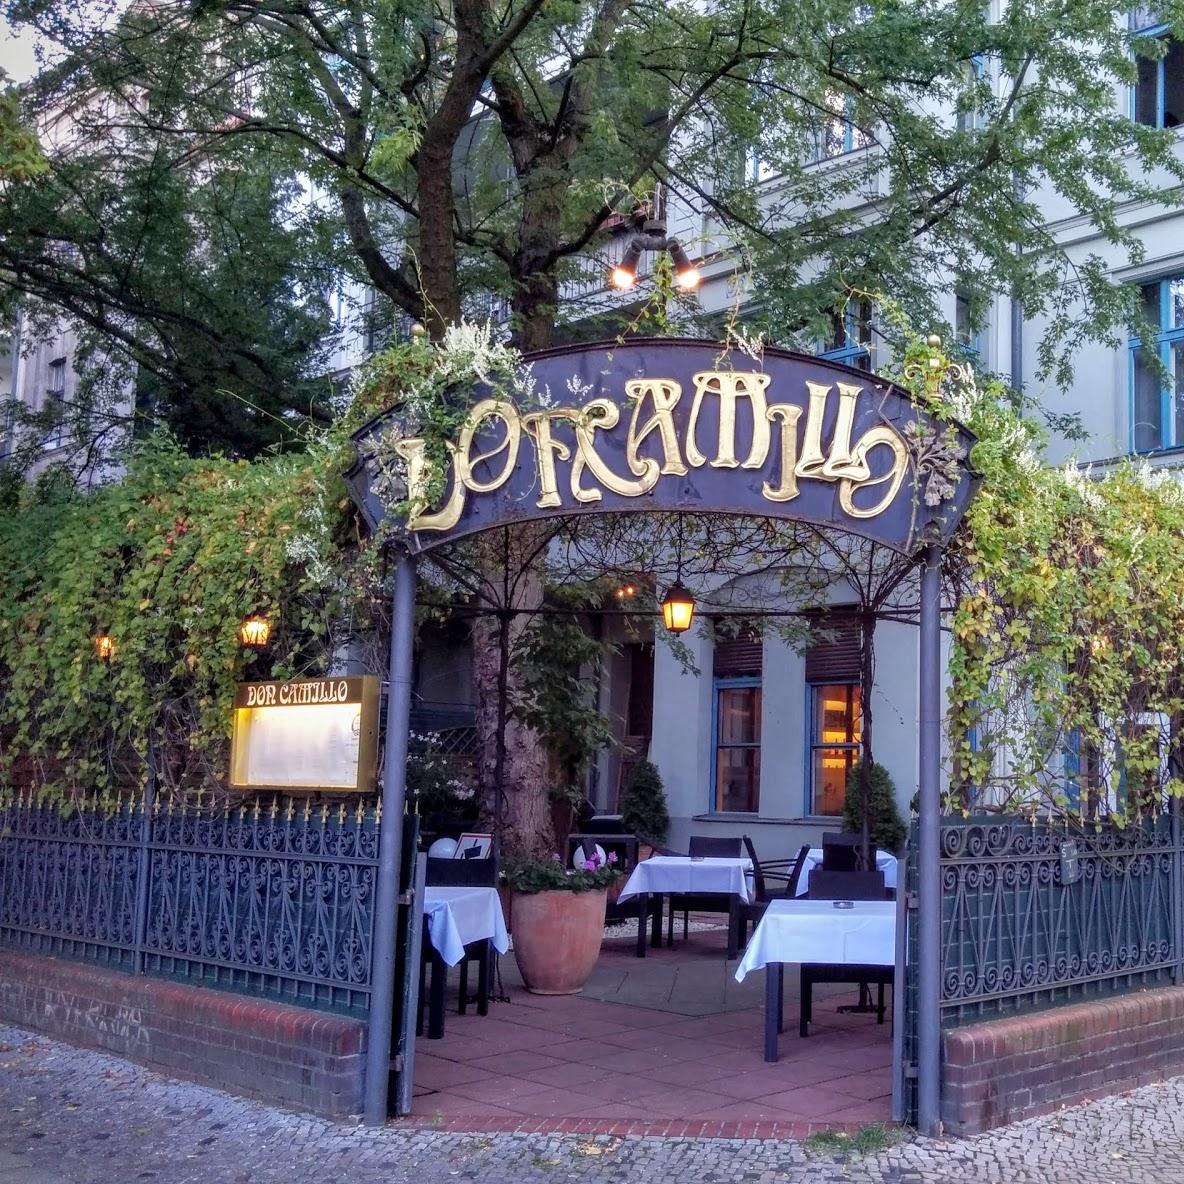 Restaurant "Don Camillo" in  Berlin